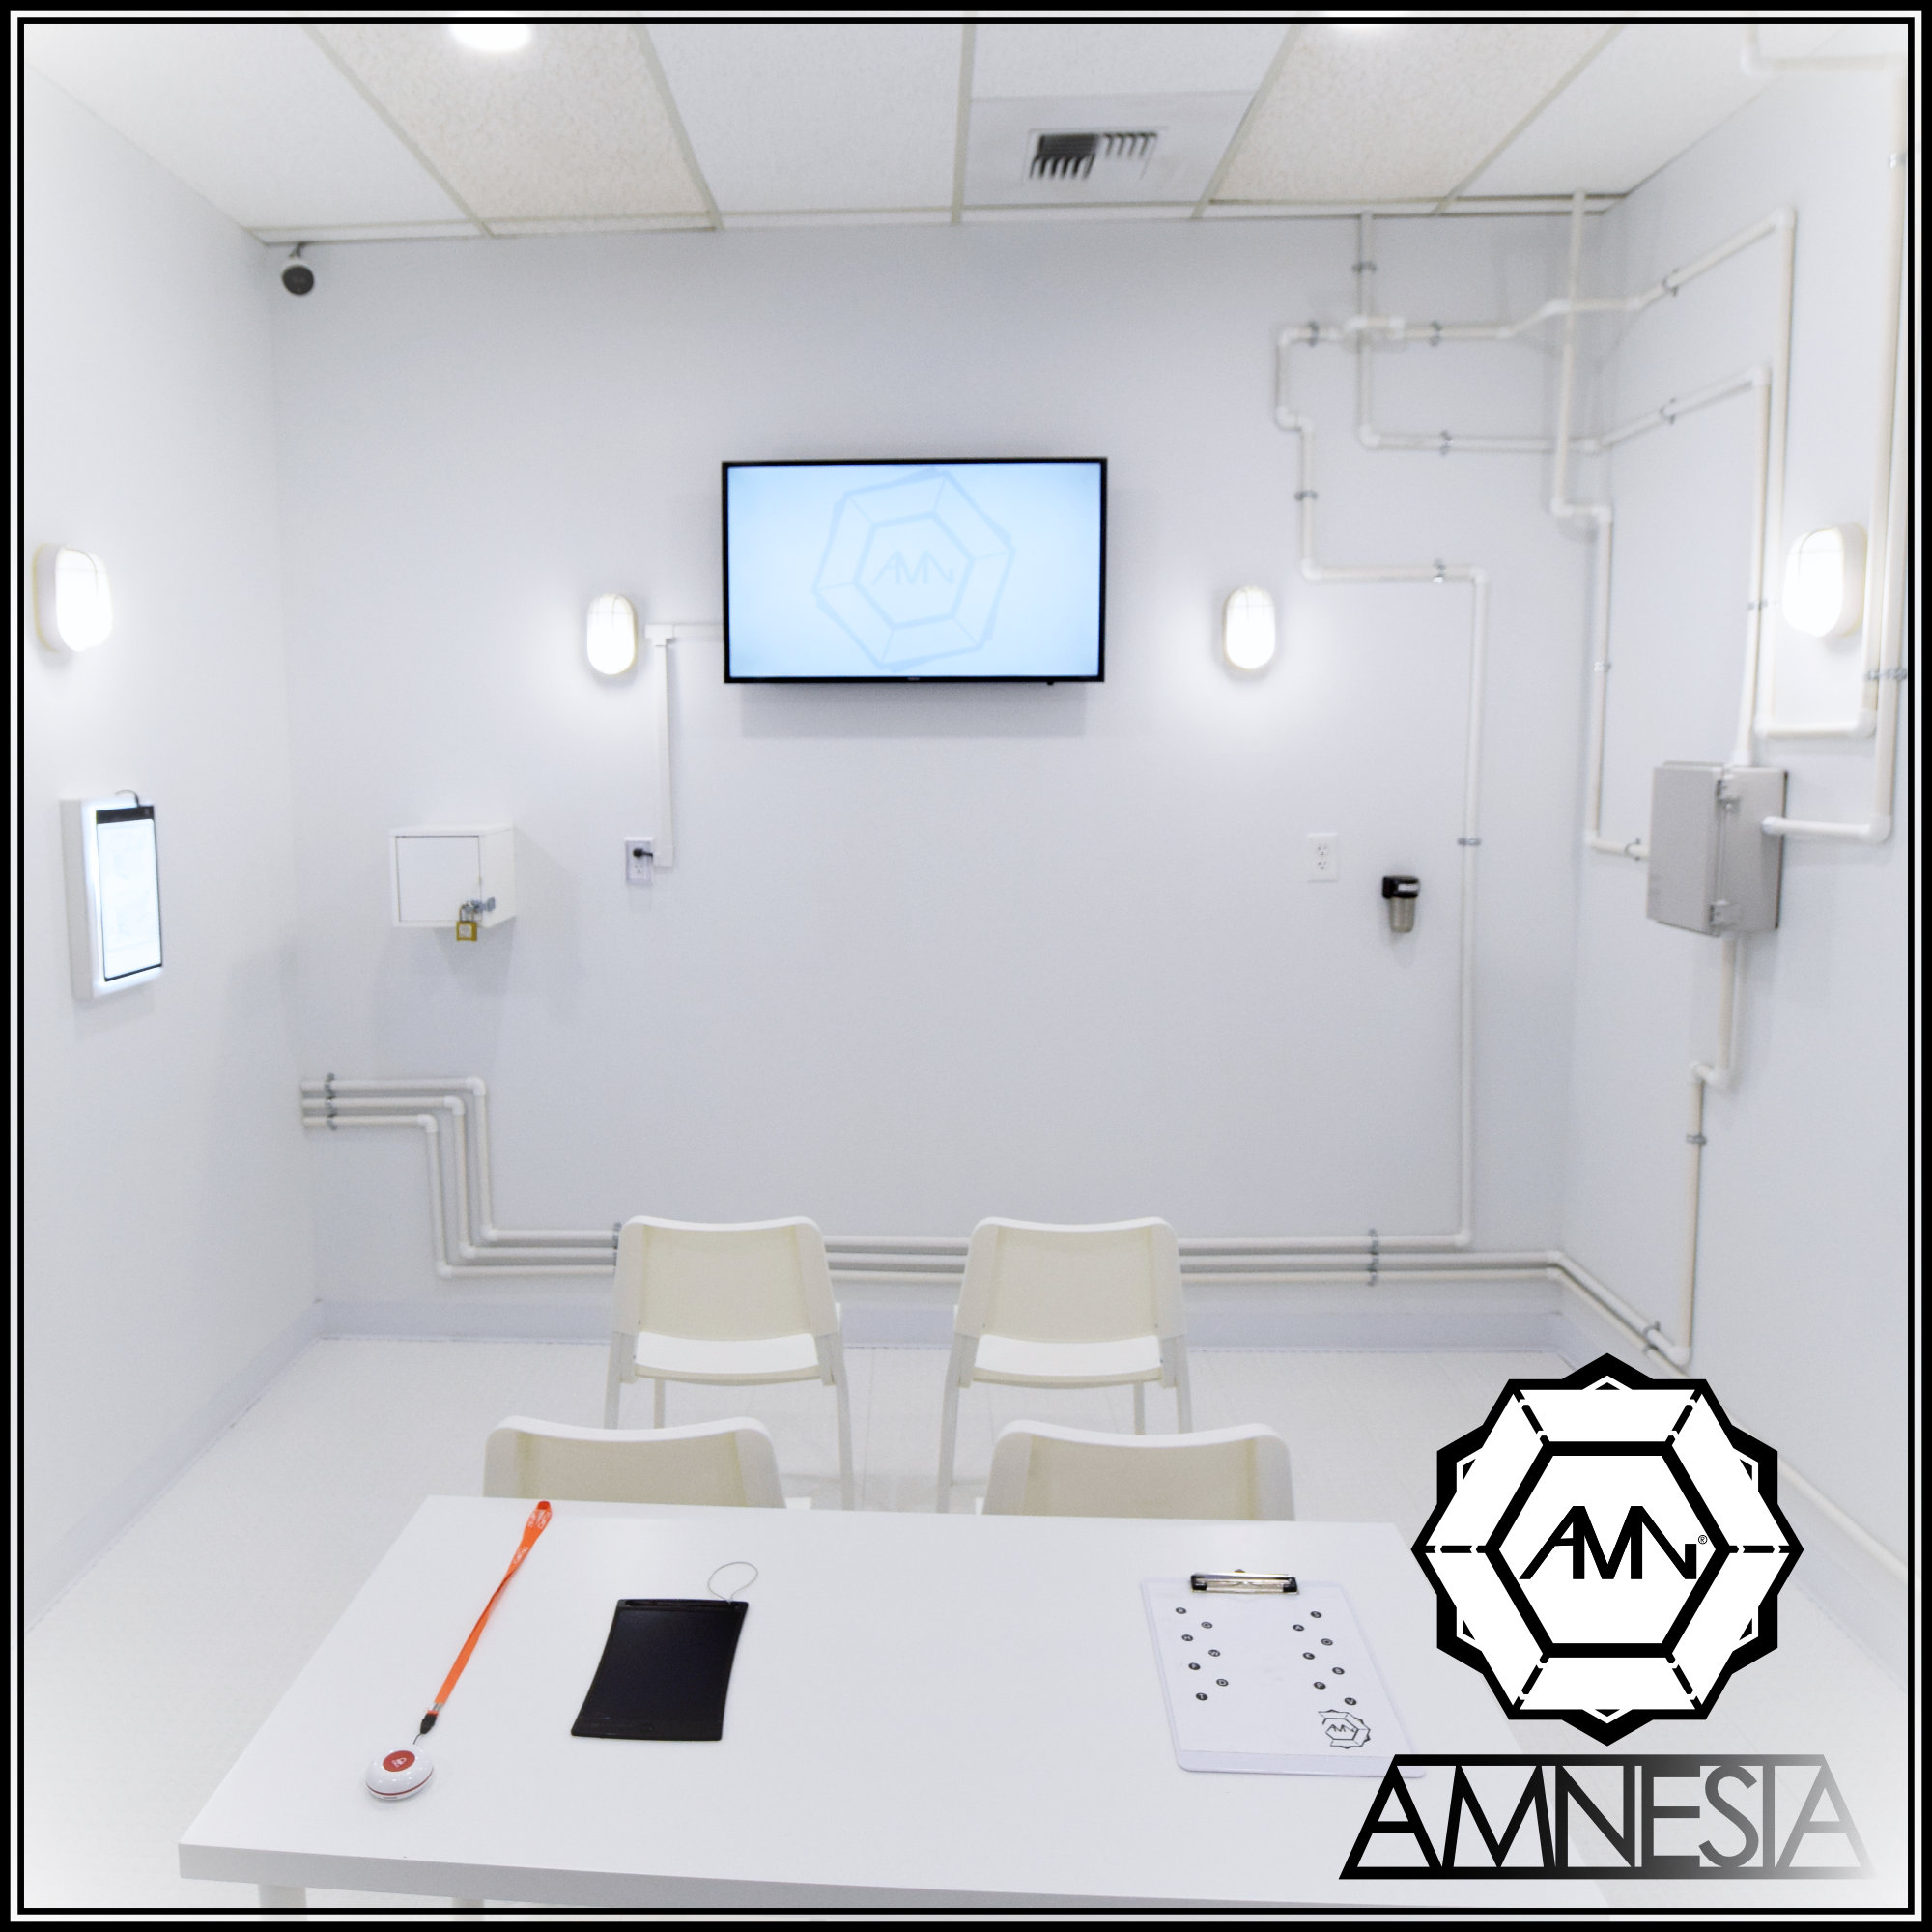 snapshot of amnesia, an escape room at paradigmQ escape games